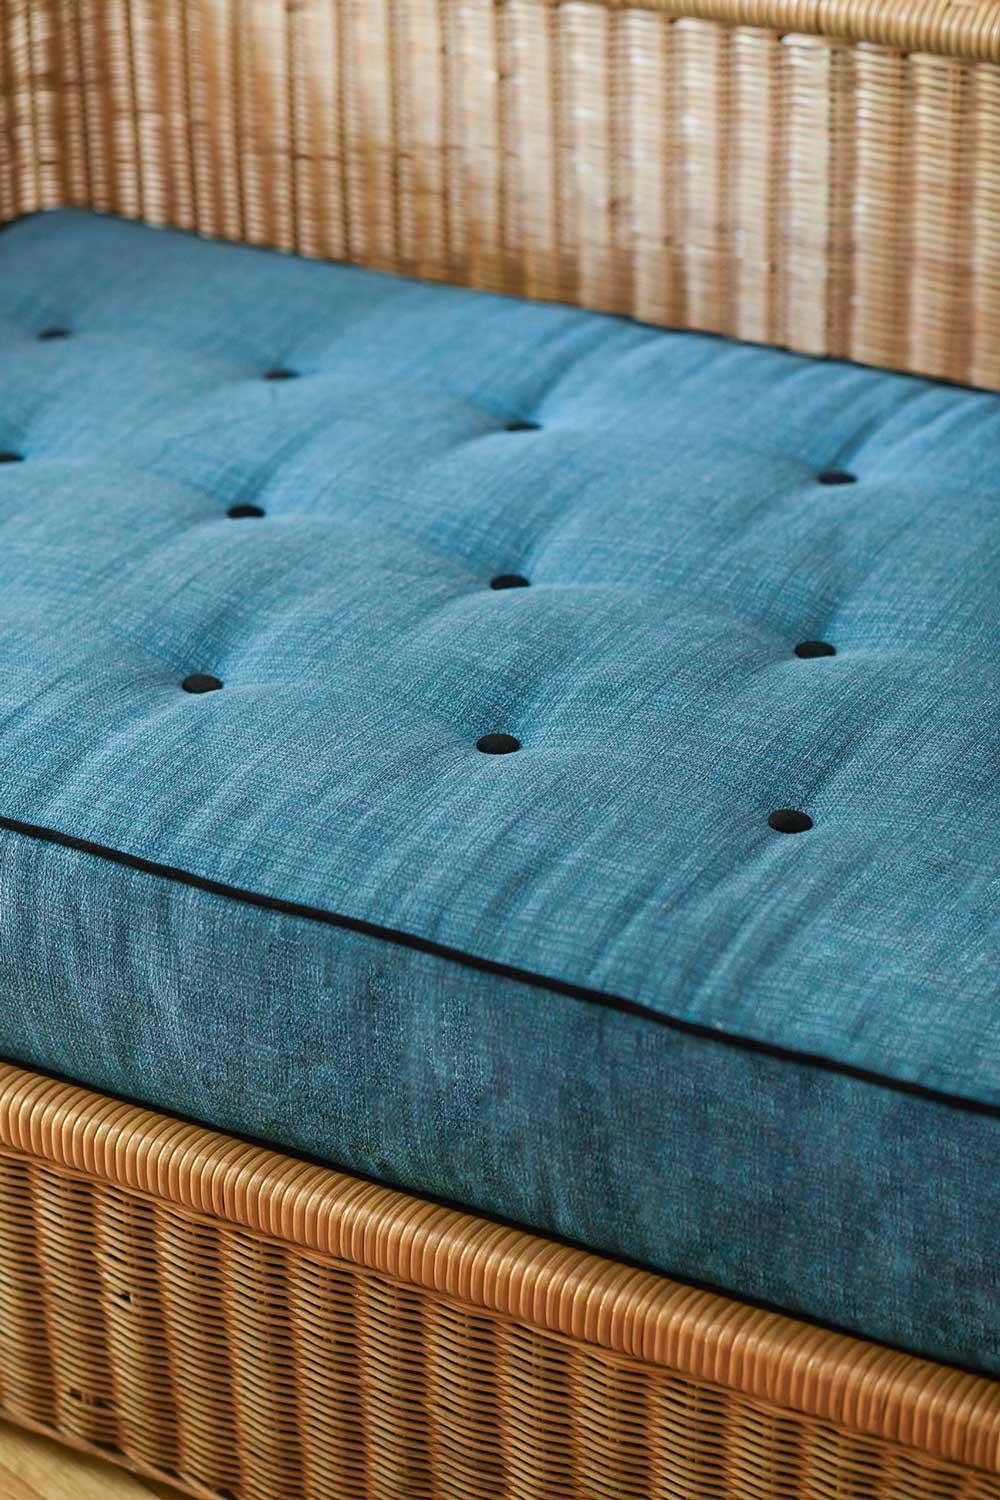 Italian Wicker sofa complete with cushion